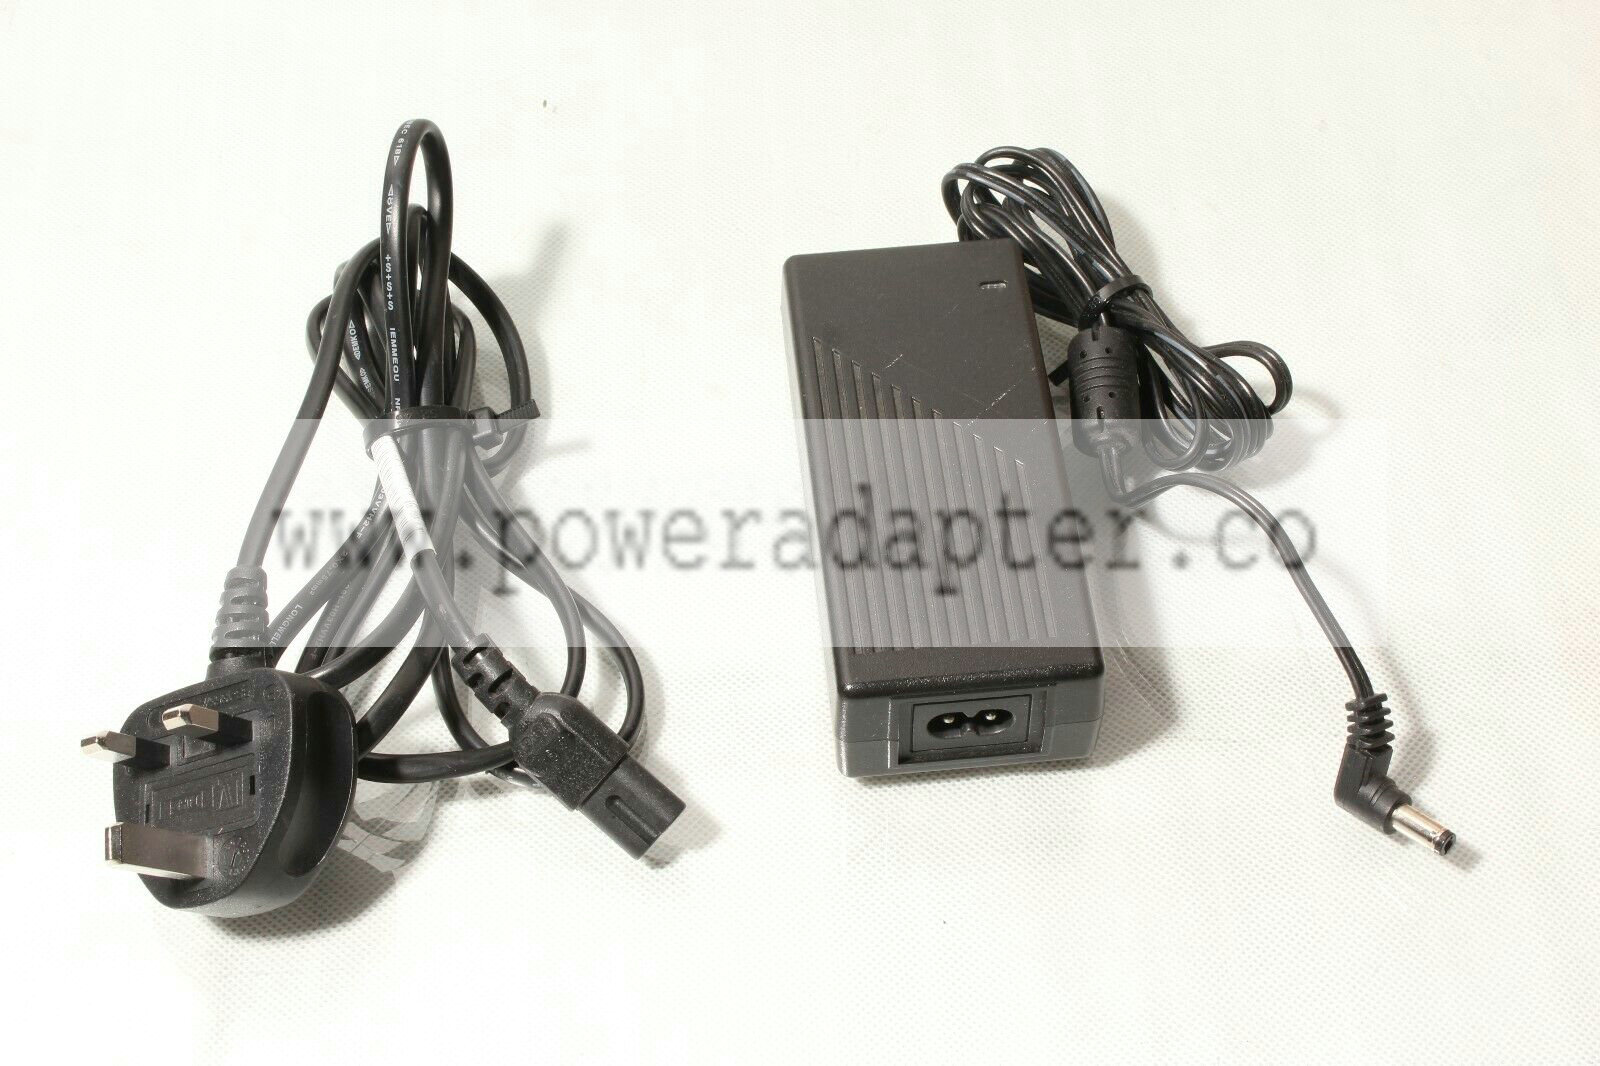 Power Supply / Mains Adapter / Adaptor. FJ-SW1204000D 12V DC 4A Model: FJ-SW1204000D Output Voltage: 12 V Type: AC